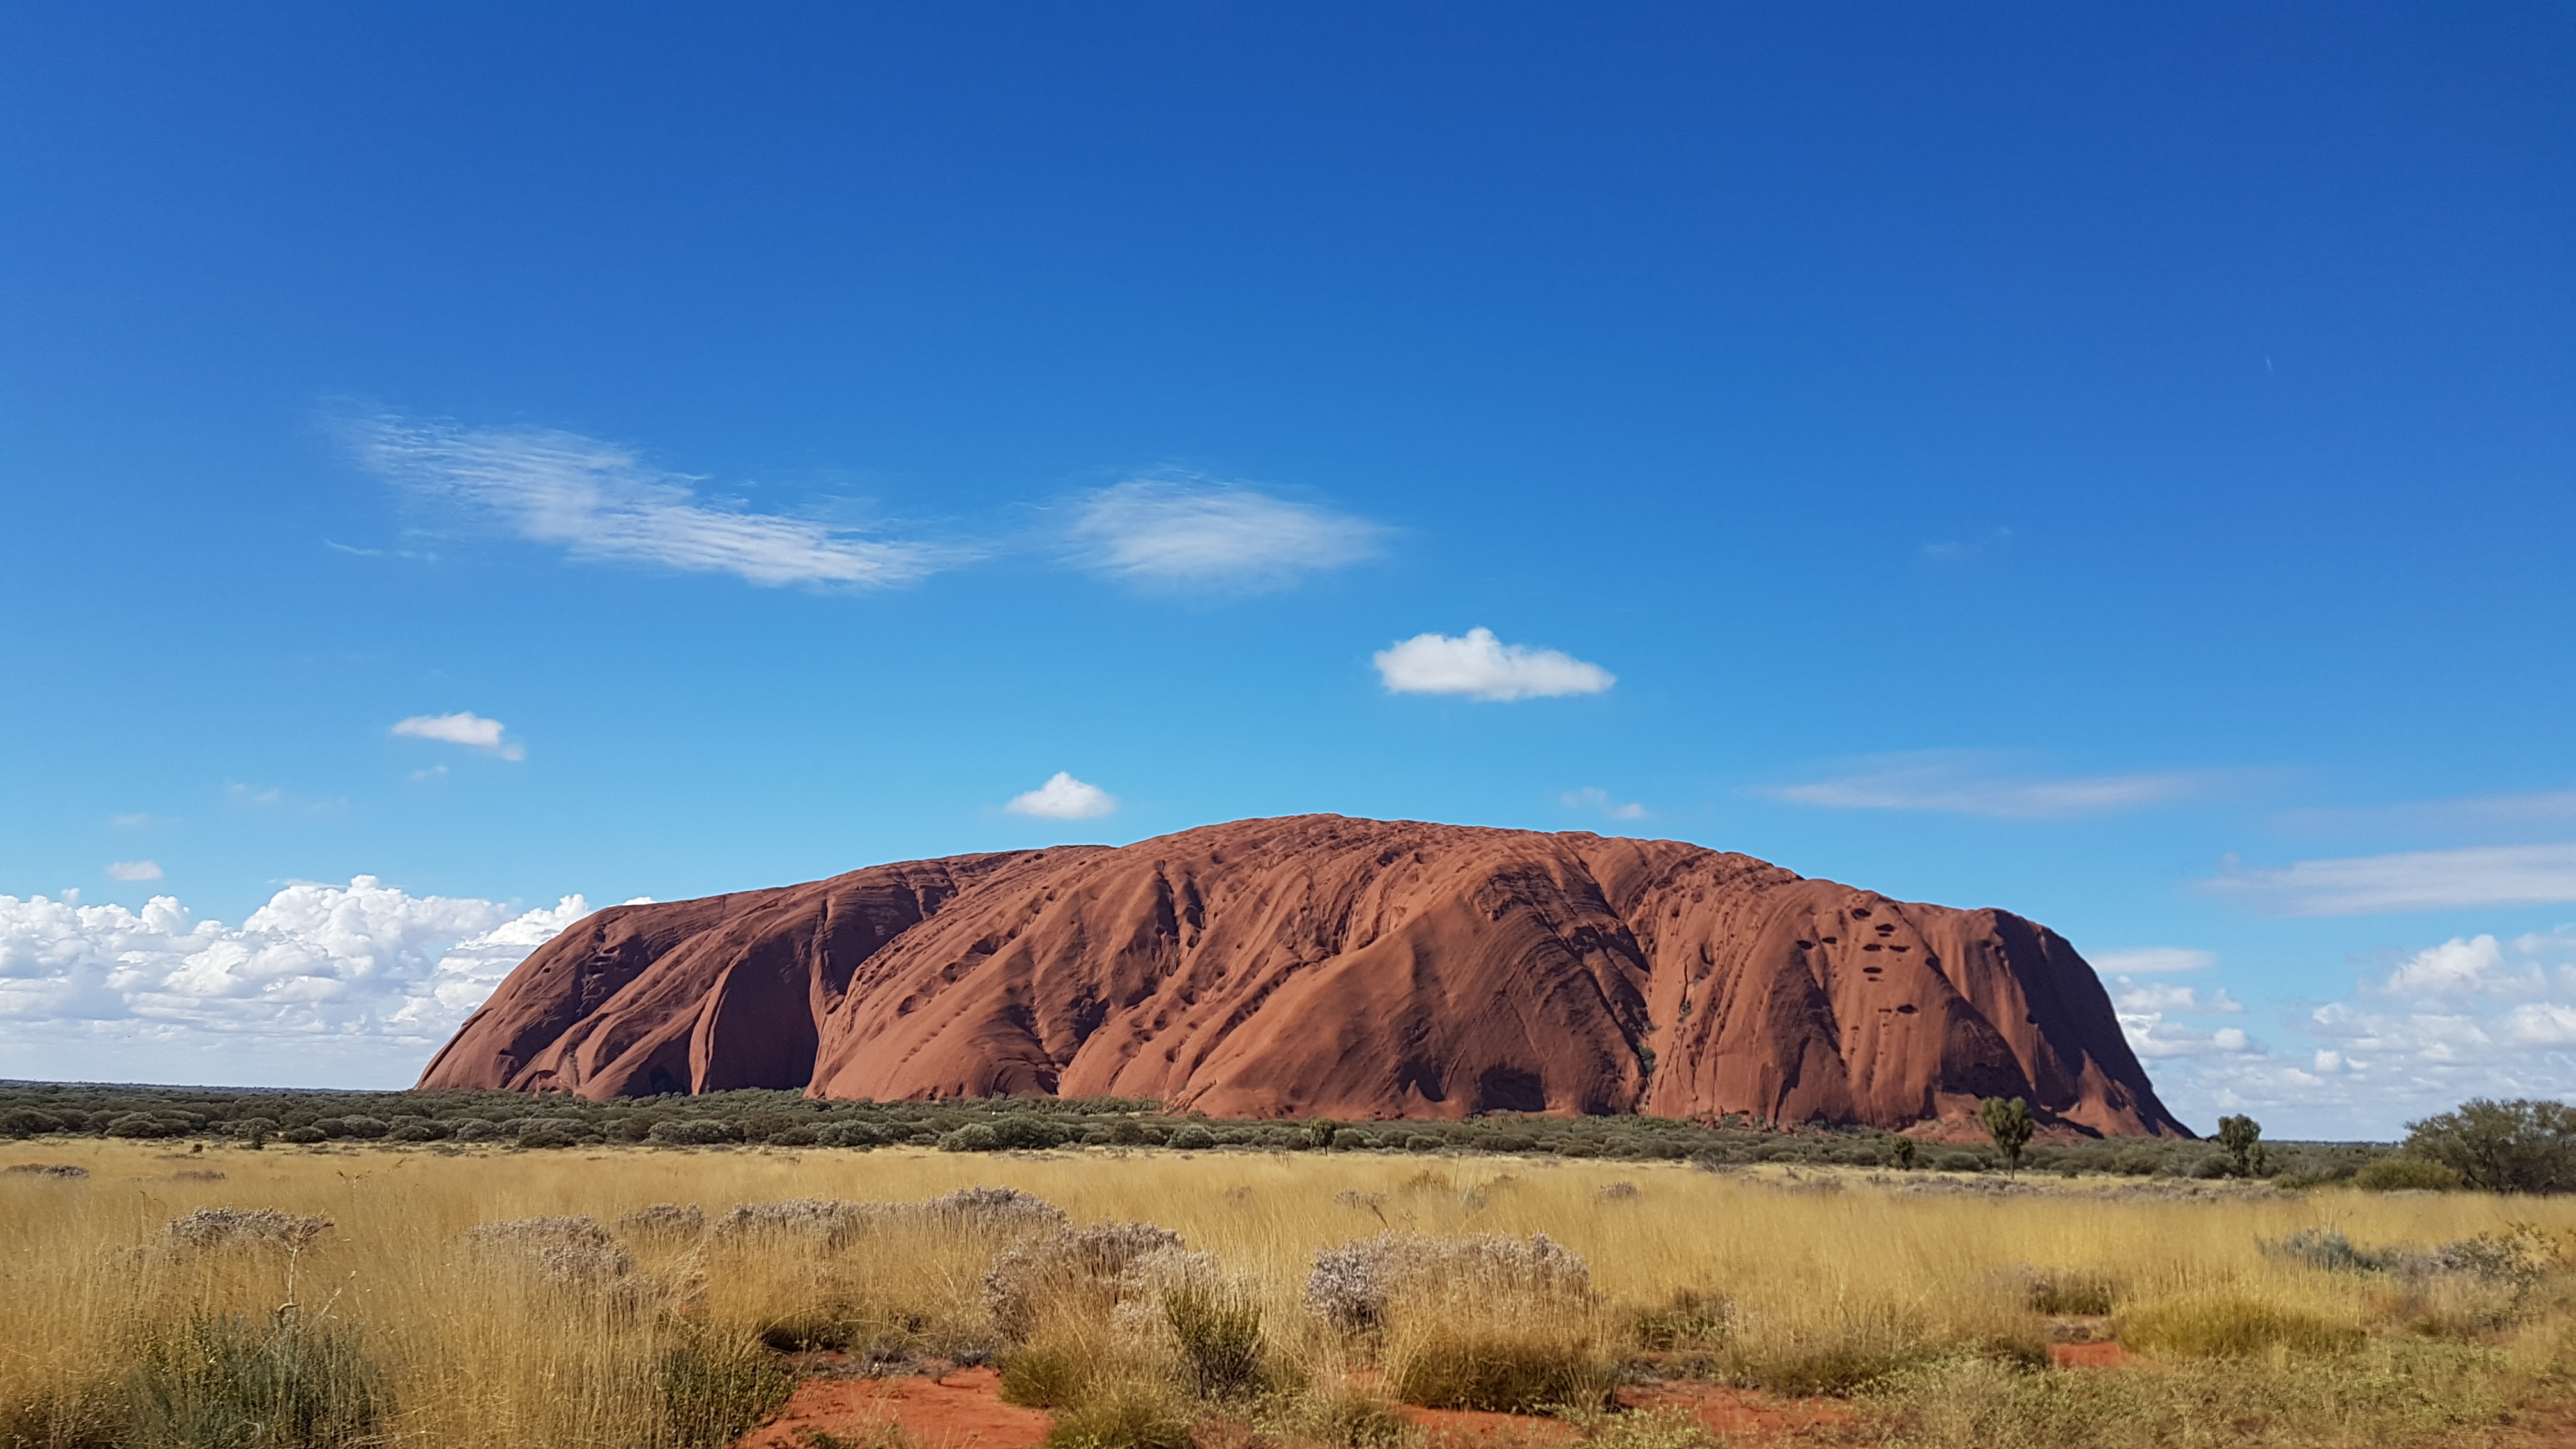 Landscape Desert Rock Ayers Rock Australia Uluru Outback 4032x2268